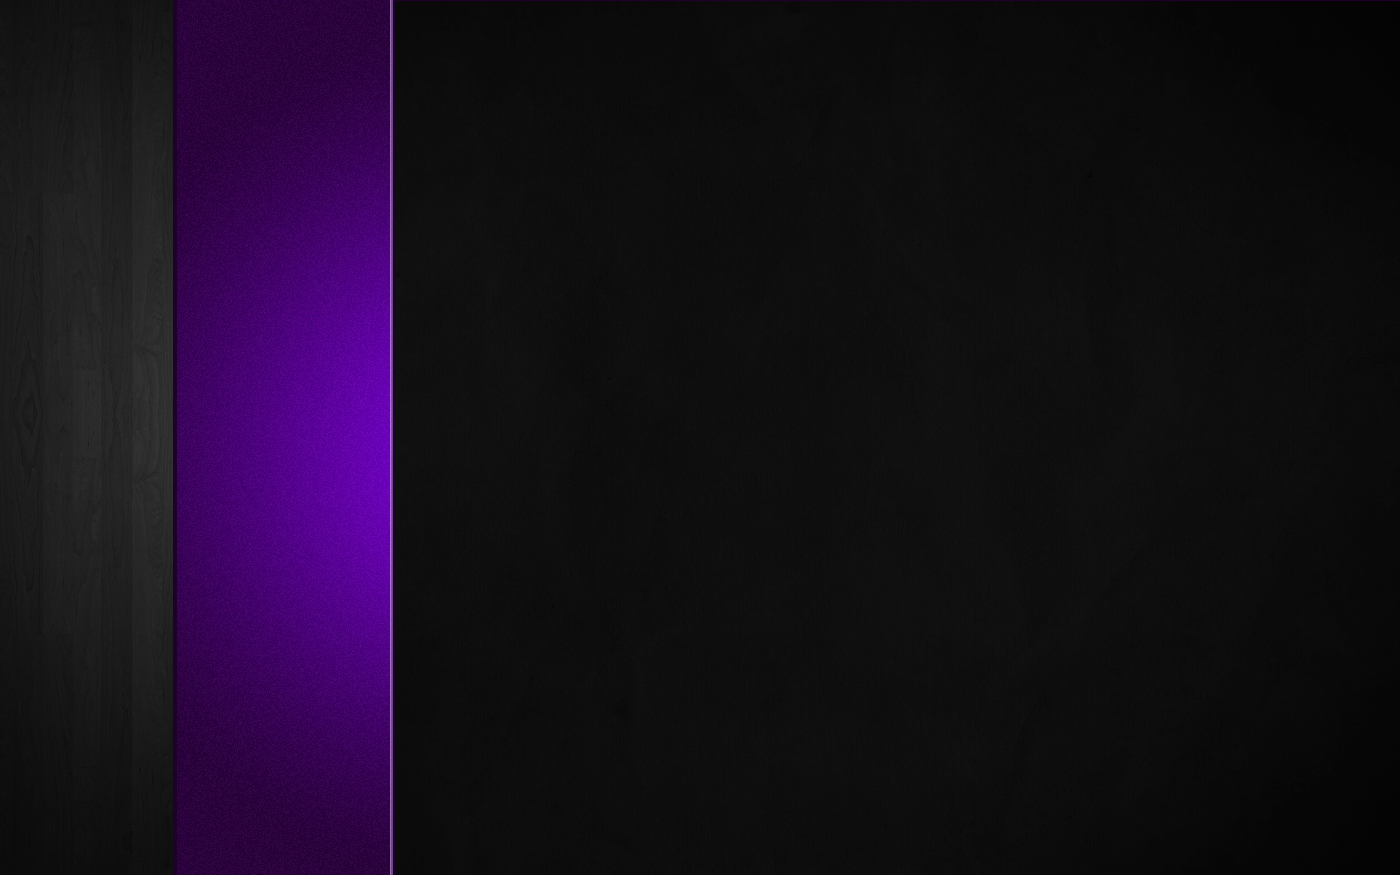 Dark Purple And Black Backgrounds Dark purple and black